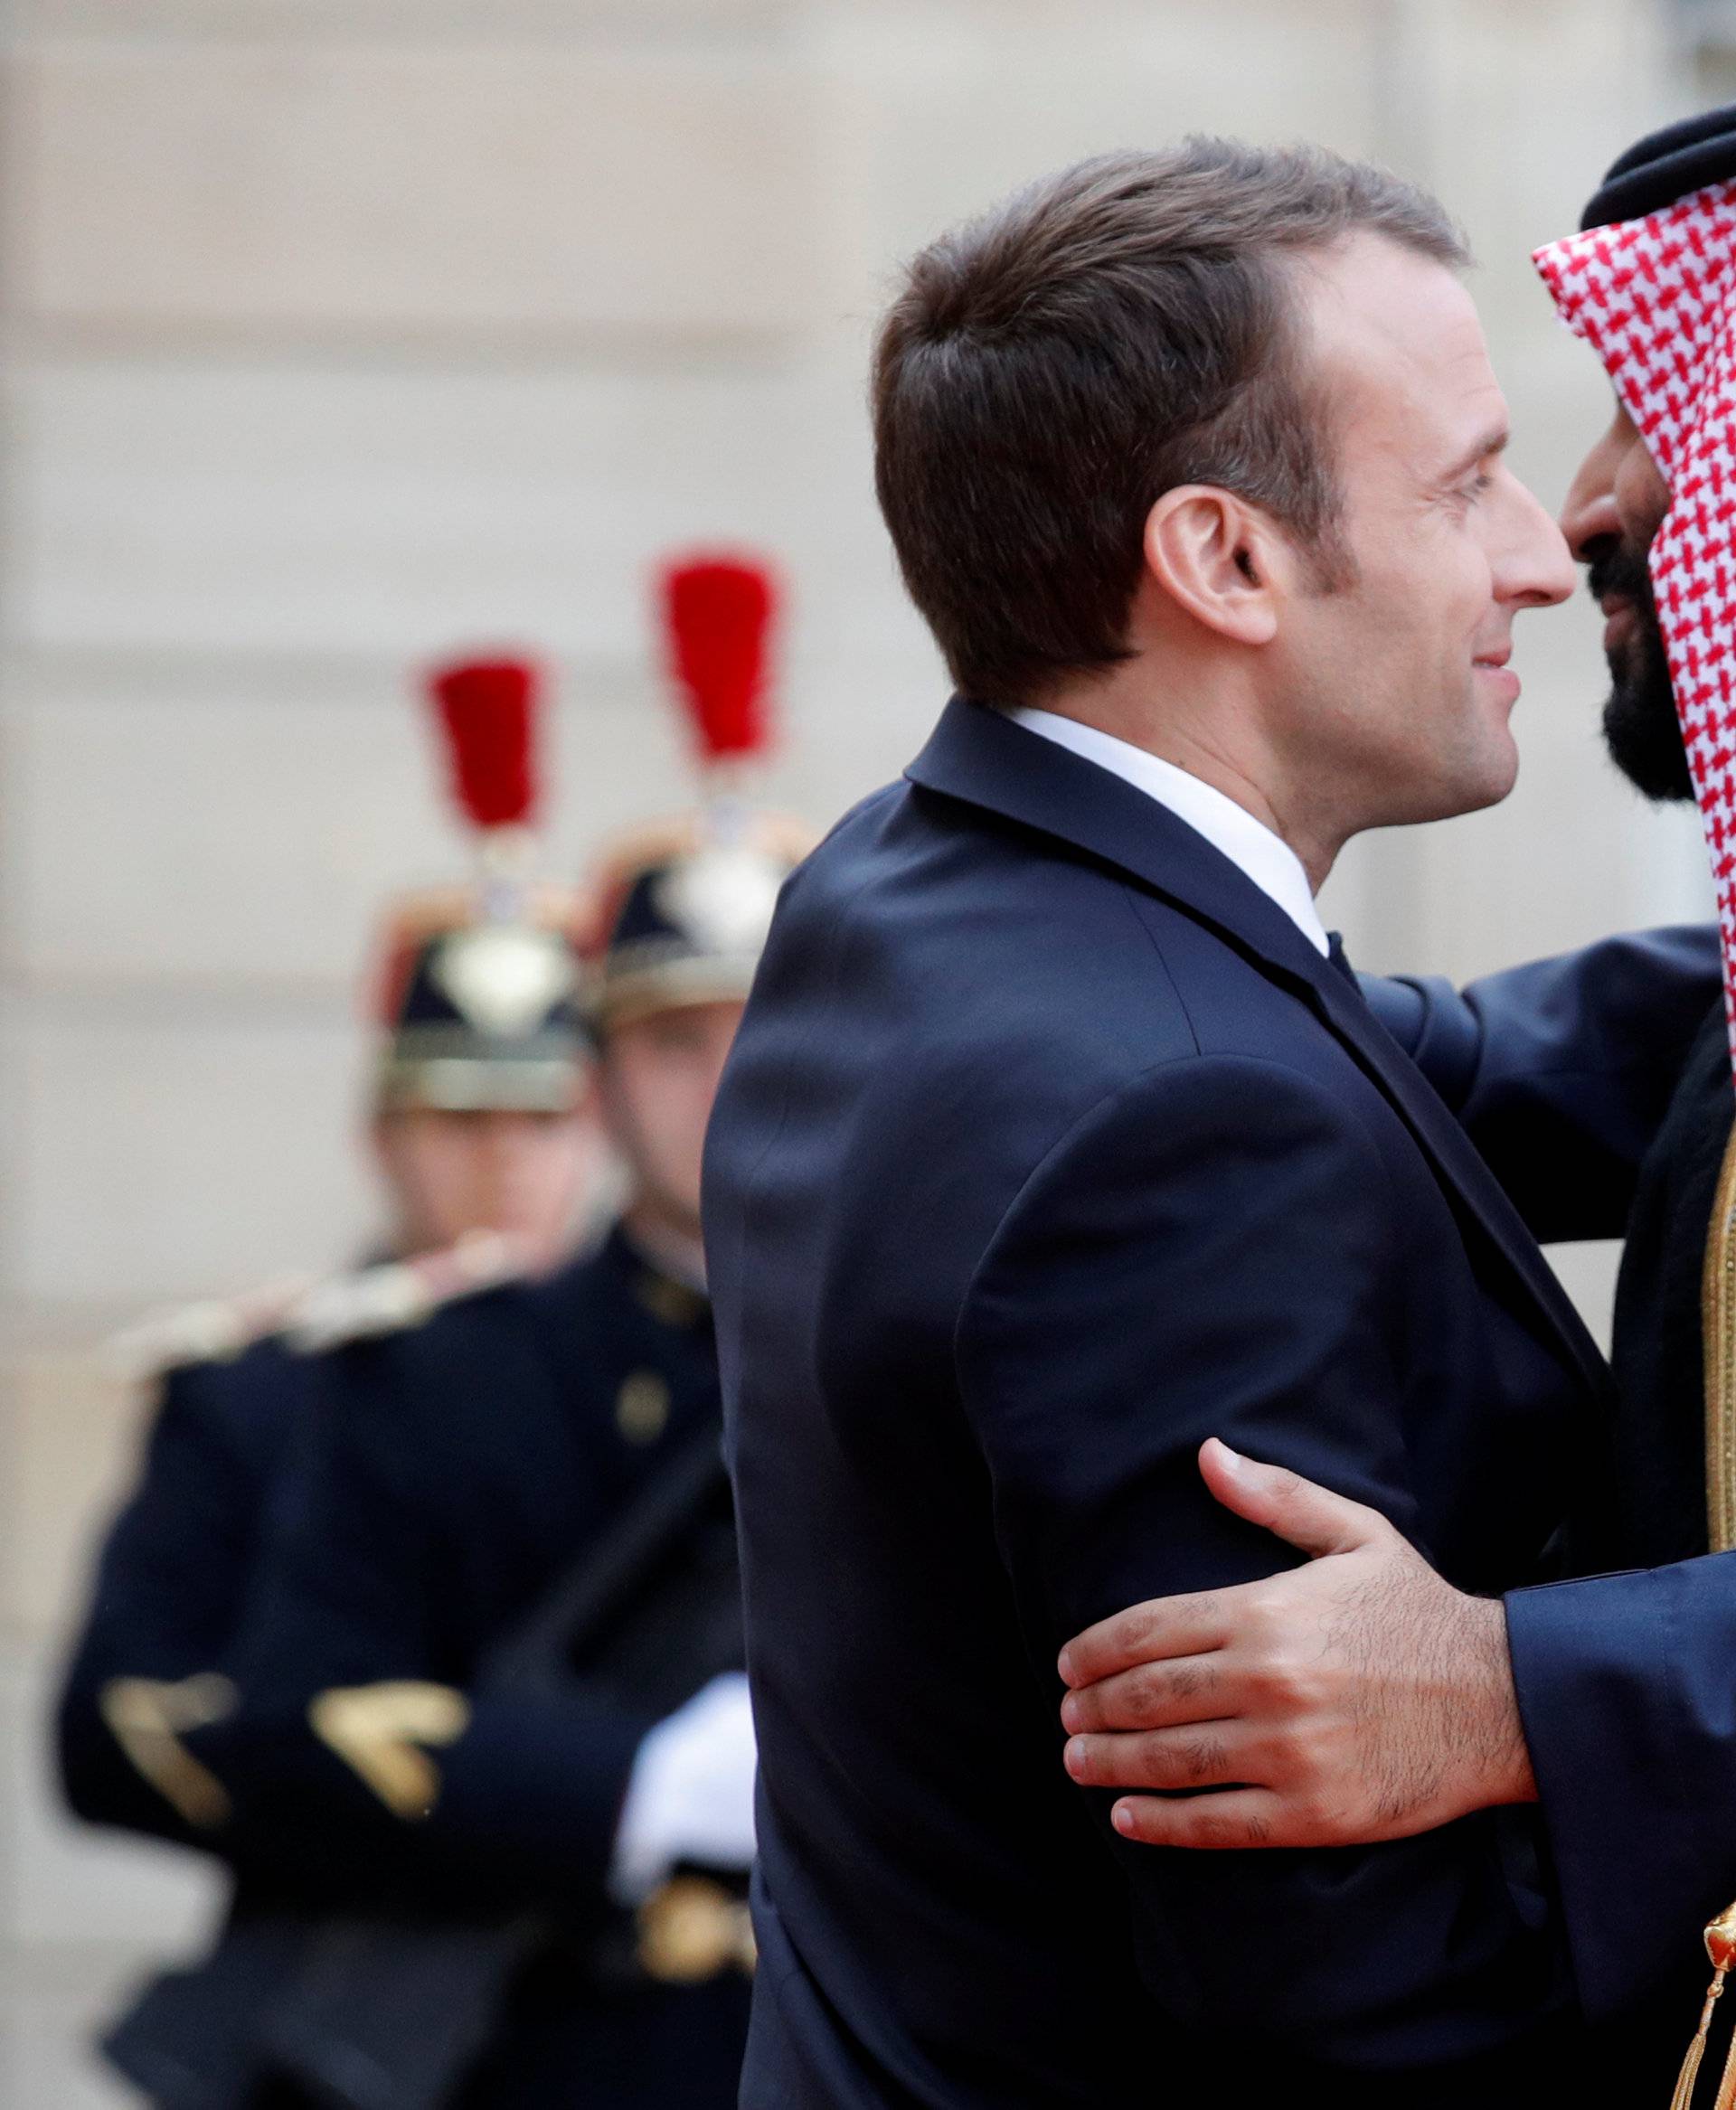 French President Emmanuel Macron welcomes Saudi Arabia's Crown Prince Mohammed bin Salman as he arrives at the Elysee Palace in Paris